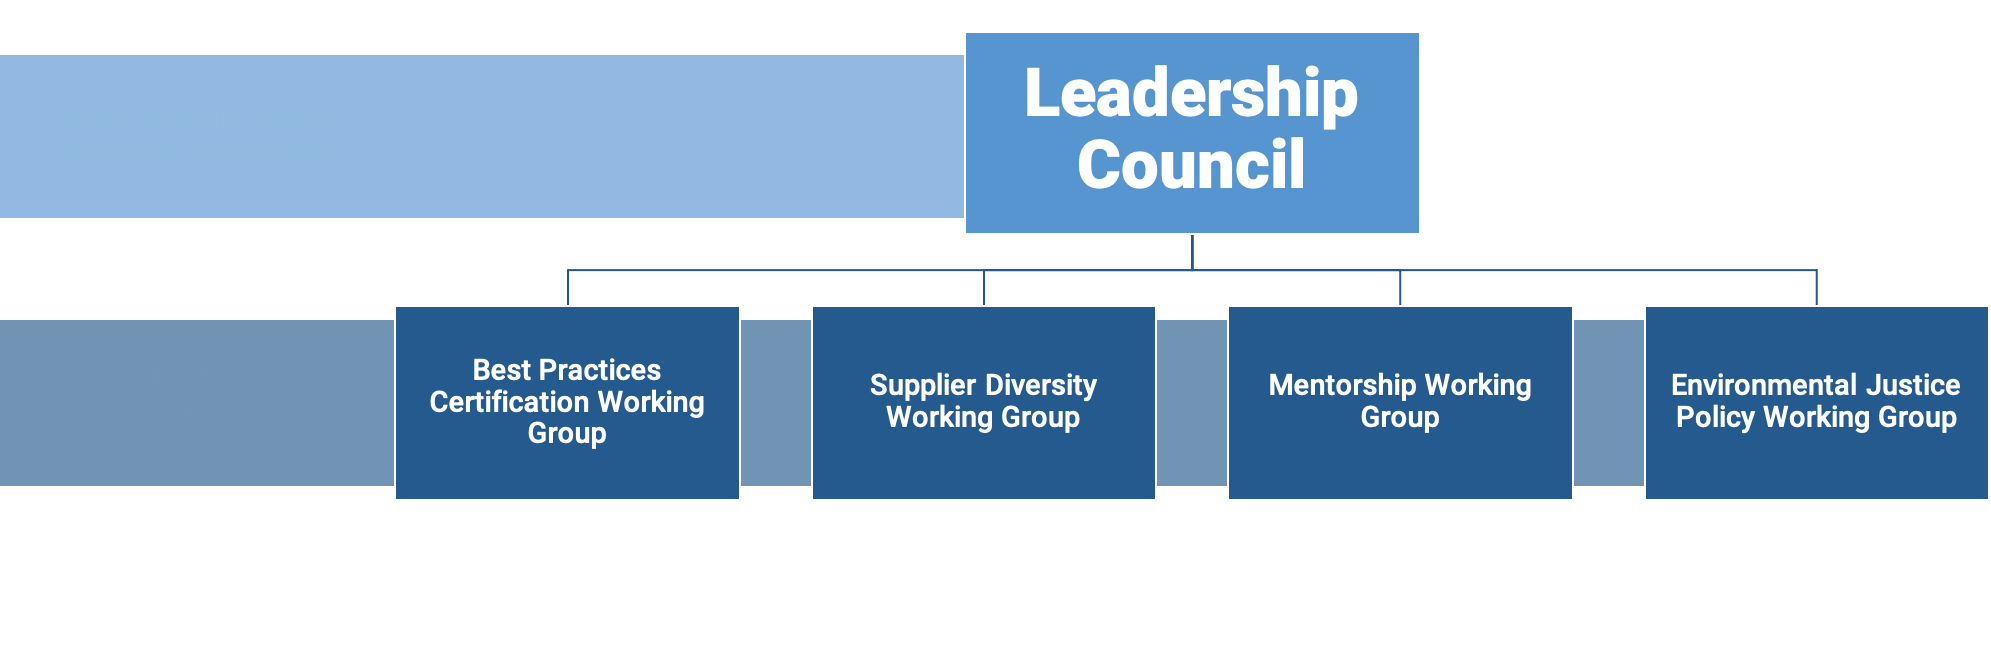 DEIJ Leadership Council Structure